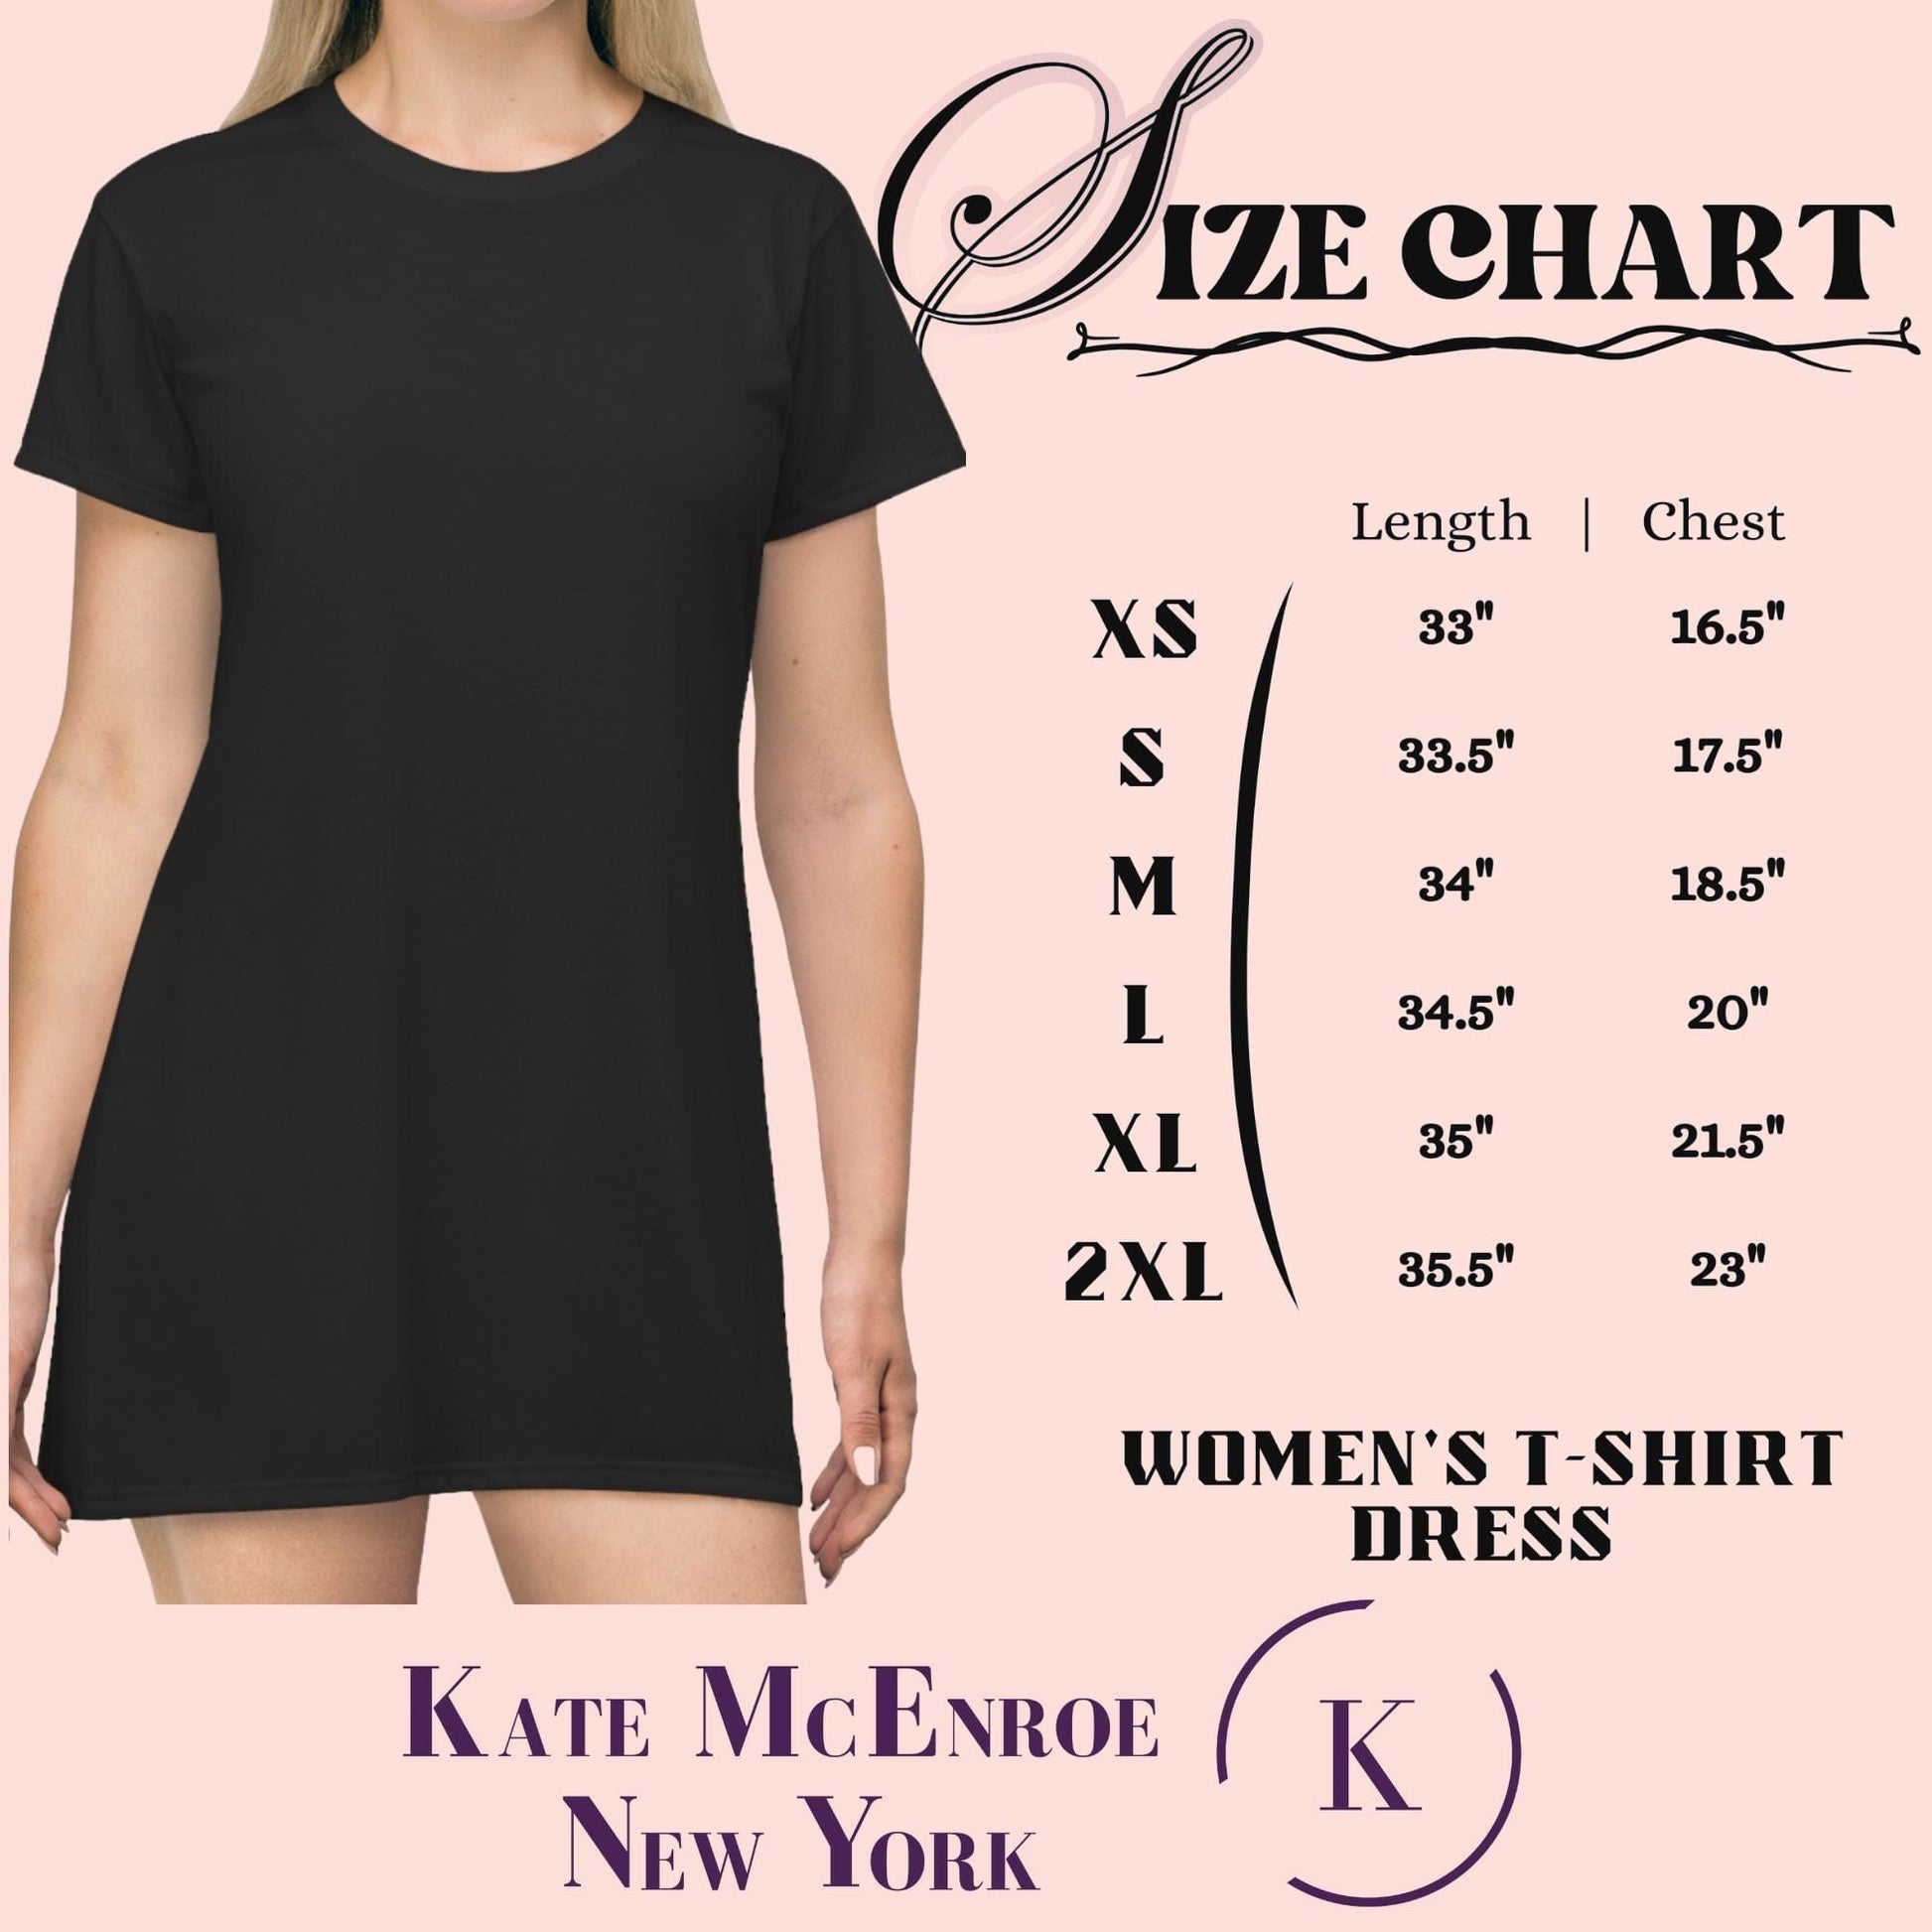 Kate McEnroe New York Atomic Cat Franciscan Diamond Starburst T-Shirt Dress, Mid Century Modern Retro Orange, Teal, Cream Party Dress Dresses